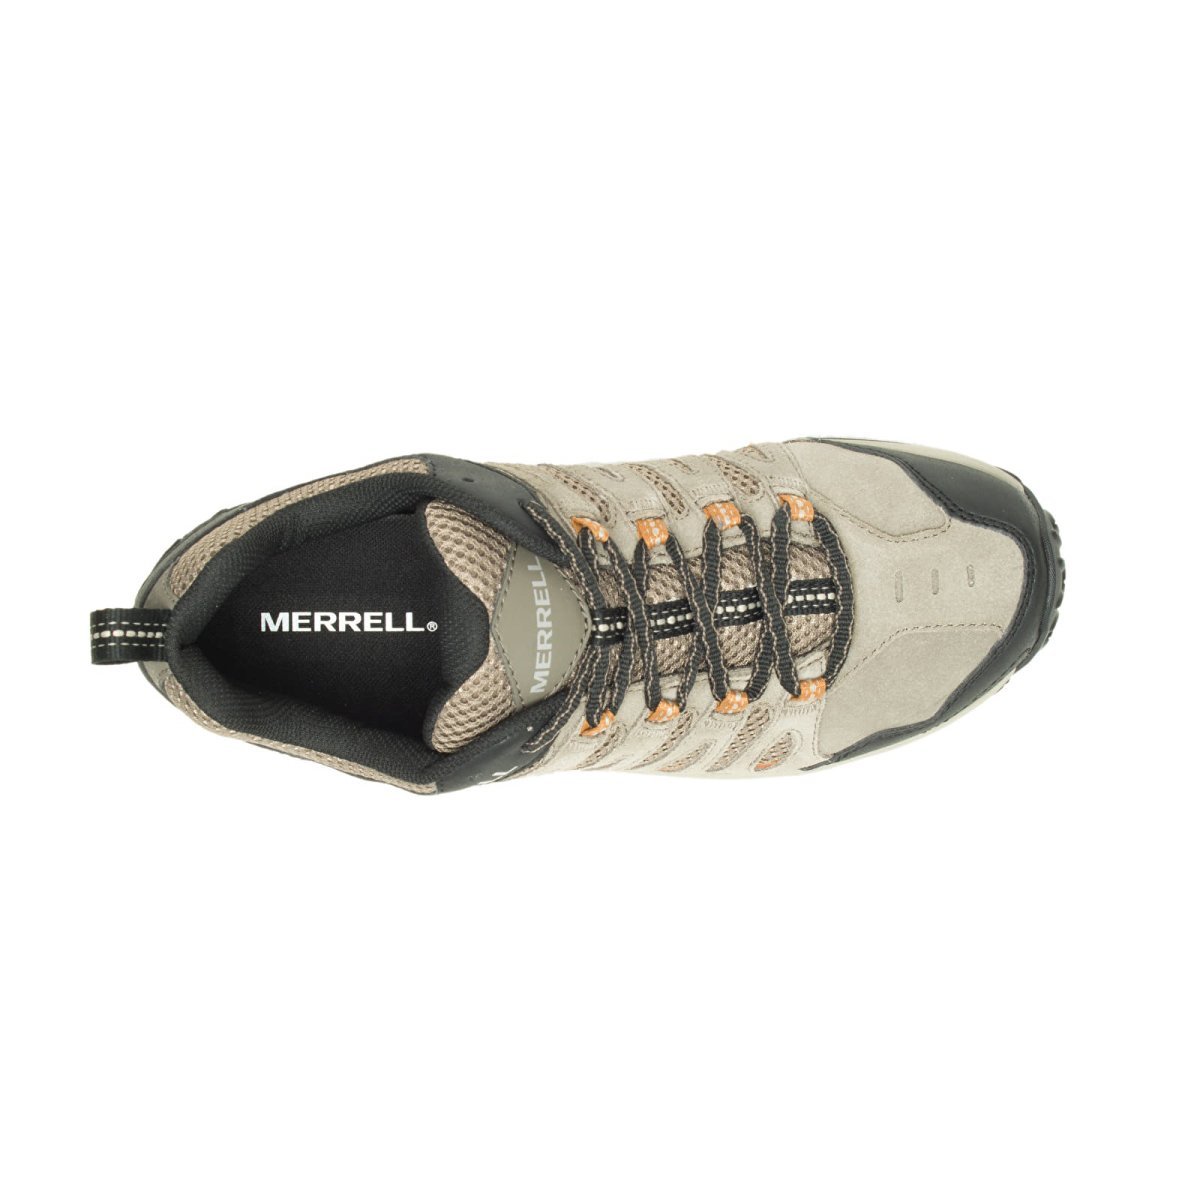 Topánky Merrell Crosslander 3 M - beige